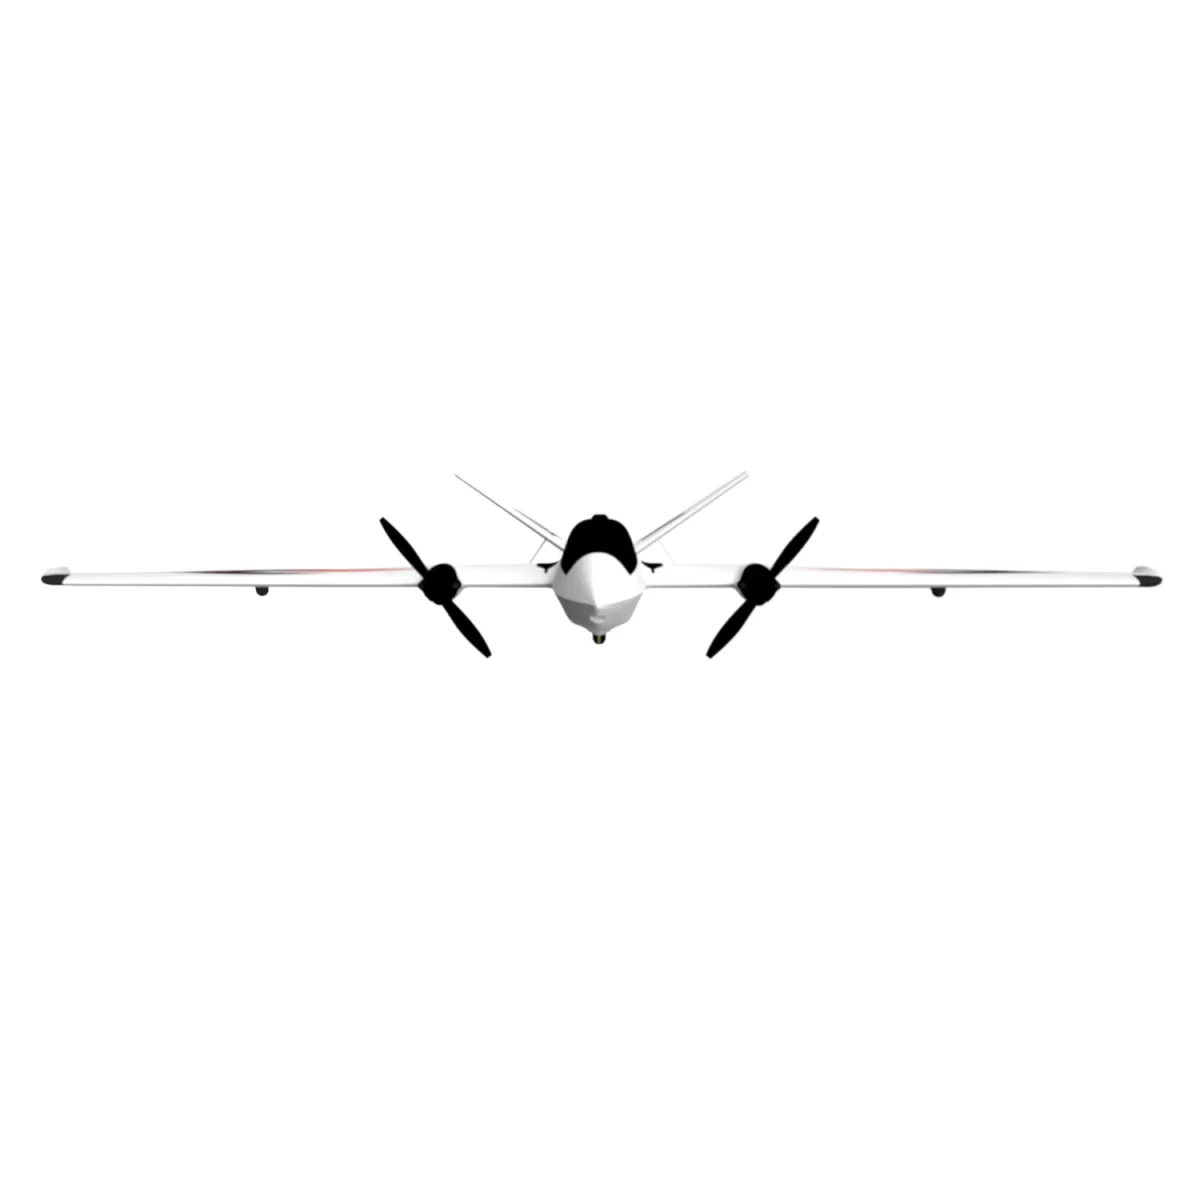 Atomrc Swordfish FPV Fixed Wing-KIT VERSION(NO ELECTRONICS)